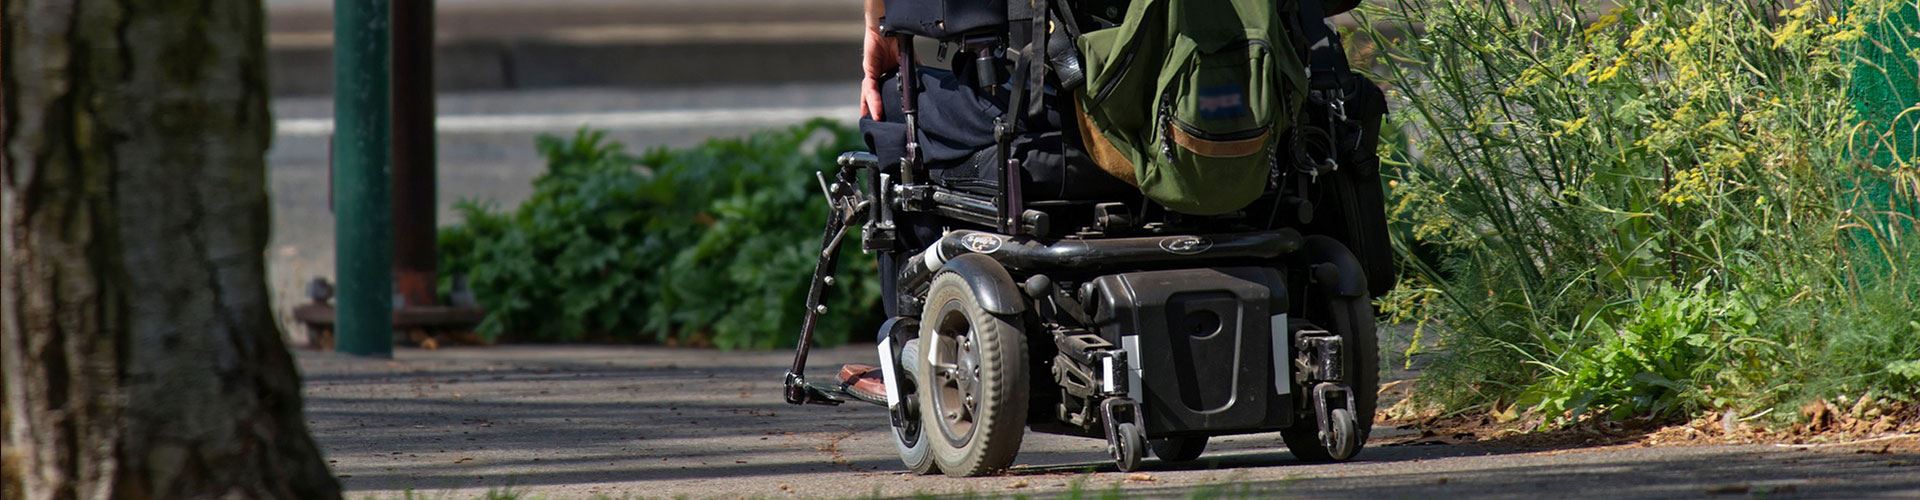 person using motorized wheelchair on sidewalk